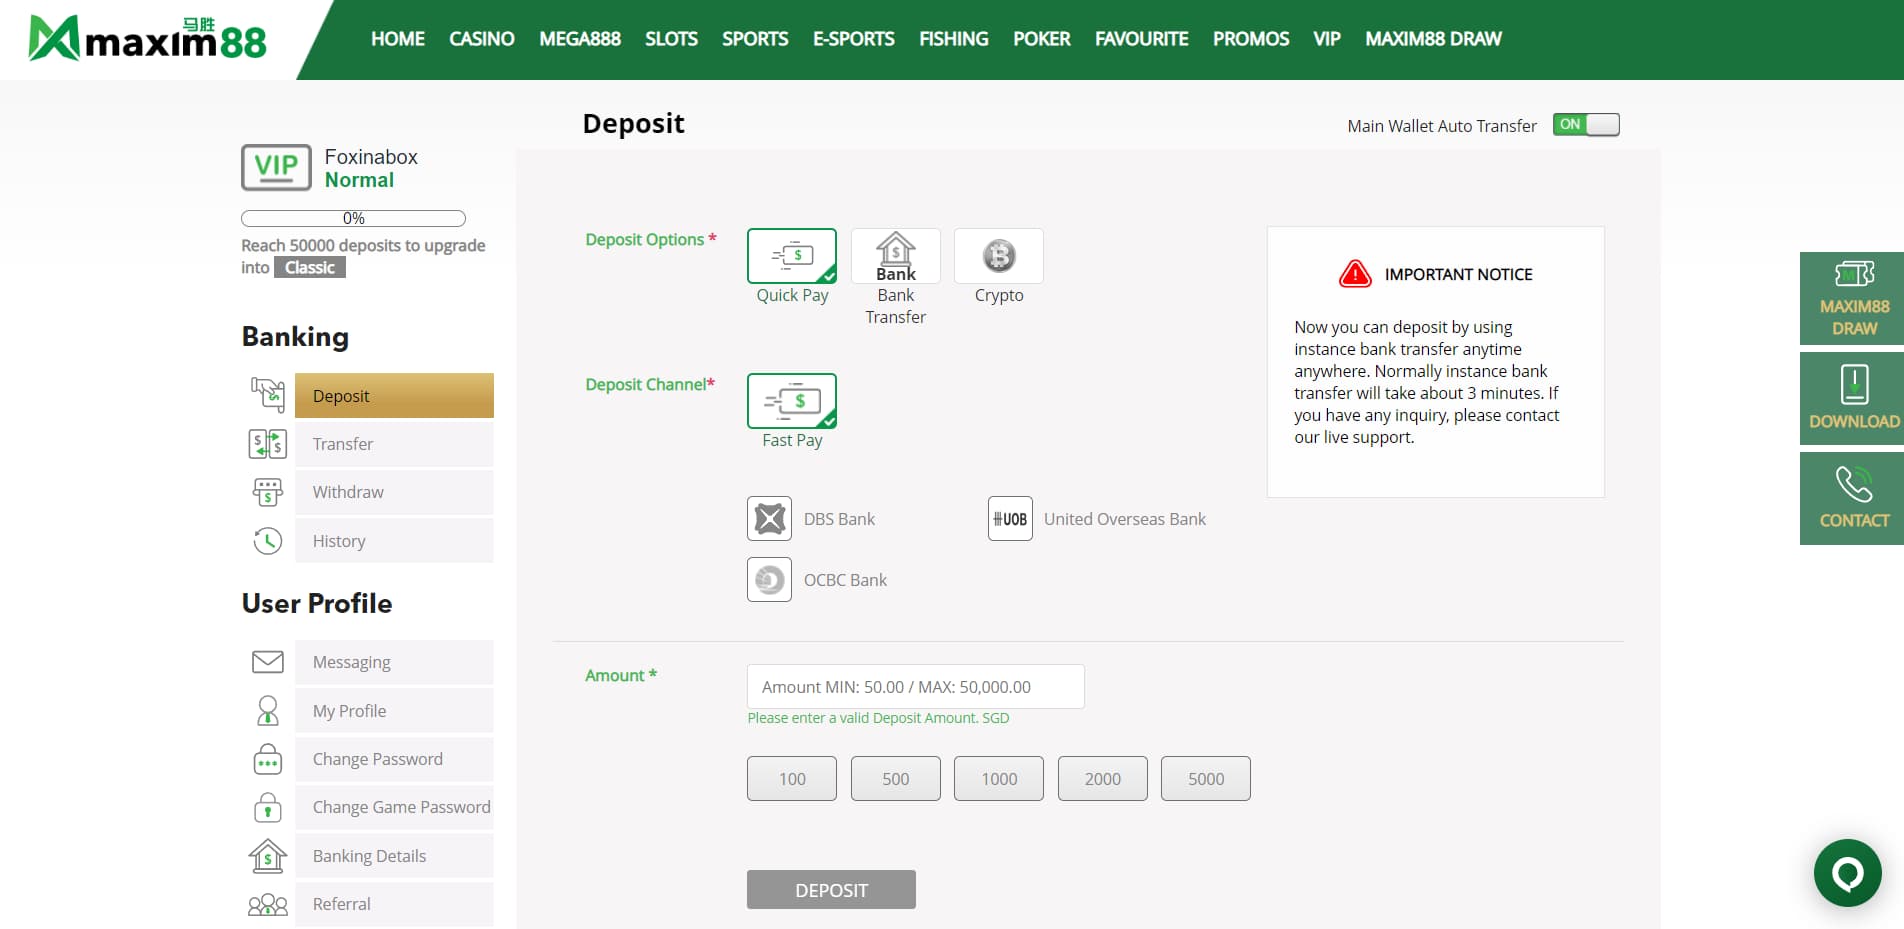 maxim88 sports betting site - deposit page screen